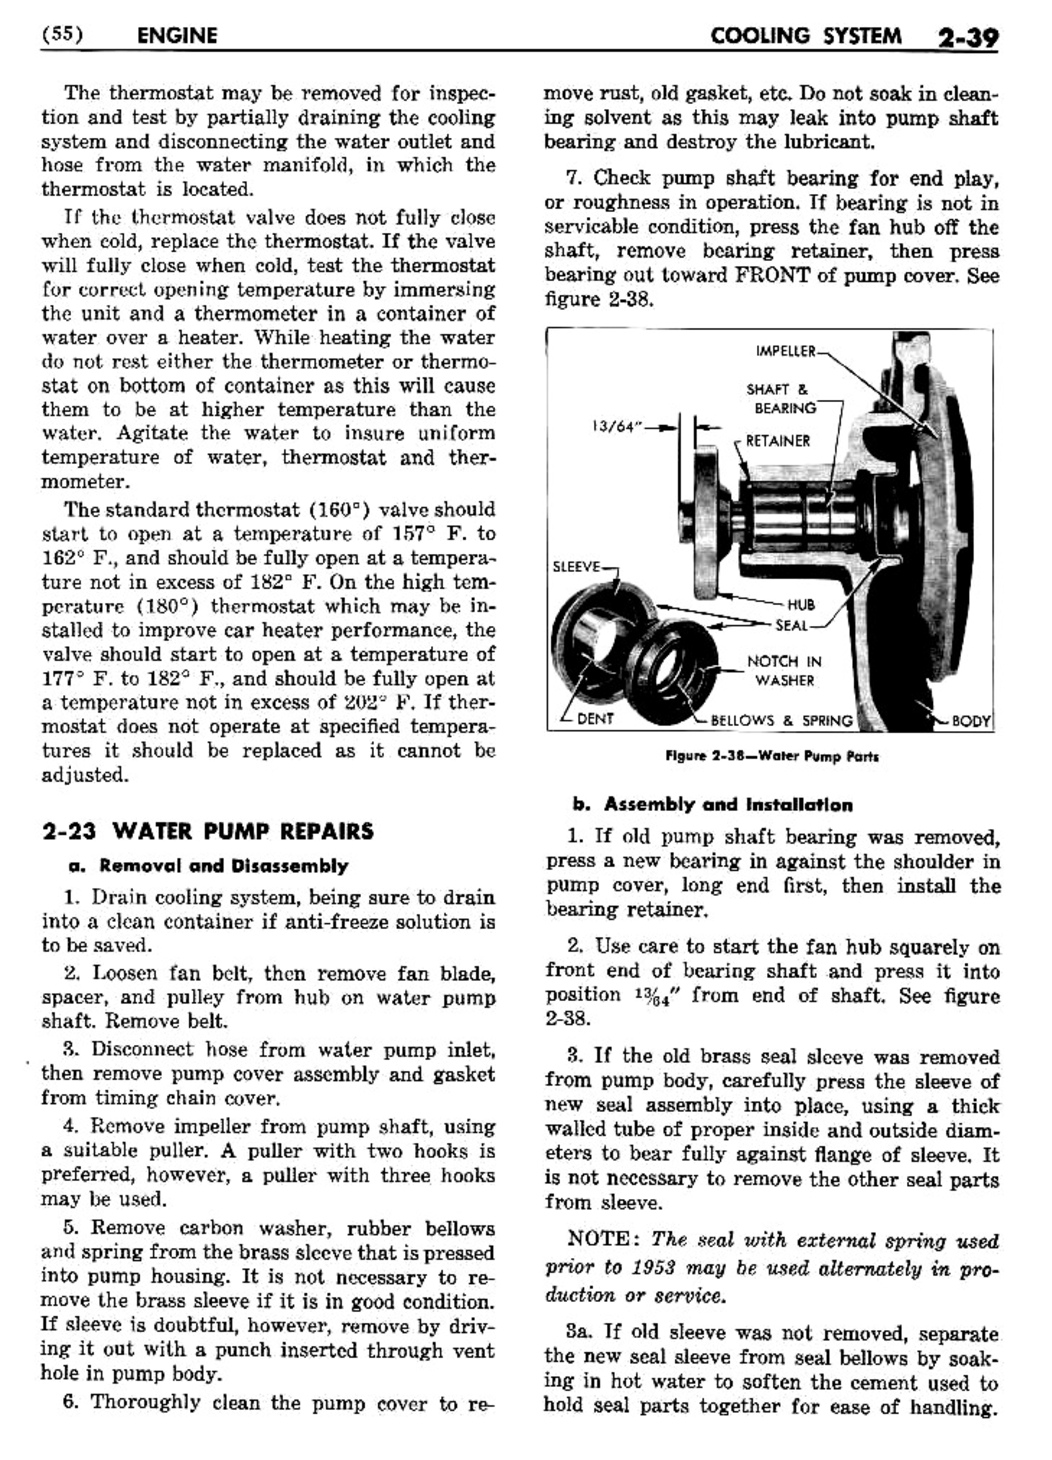 n_03 1954 Buick Shop Manual - Engine-039-039.jpg